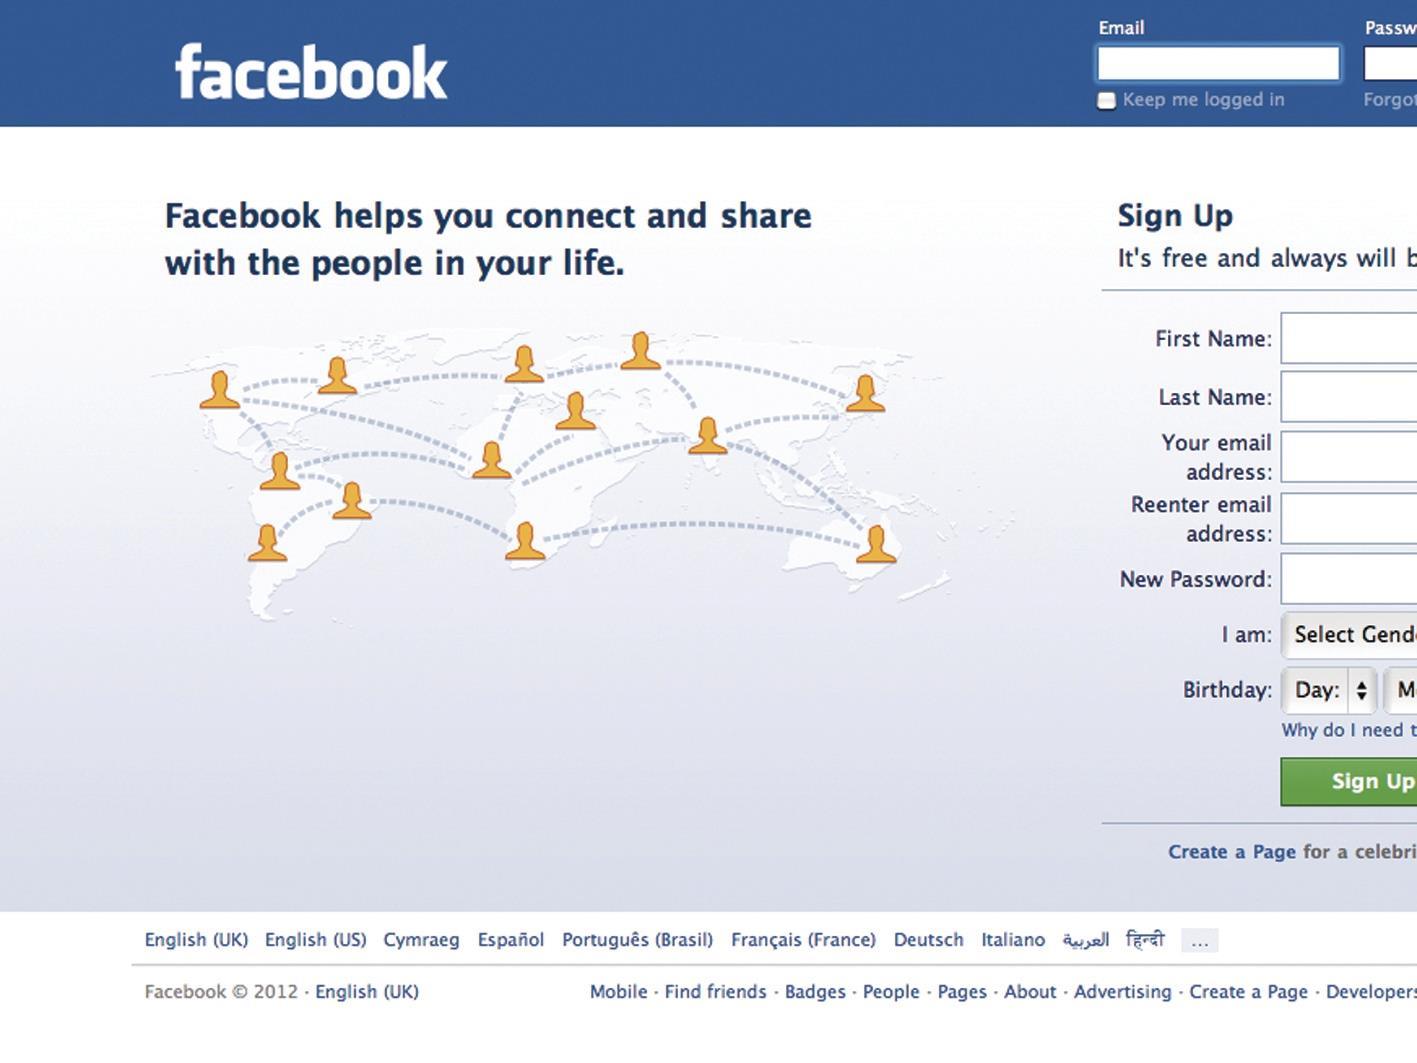 ThrowbackTechnology: Facebook's original login page - Pixafy : Pixafy